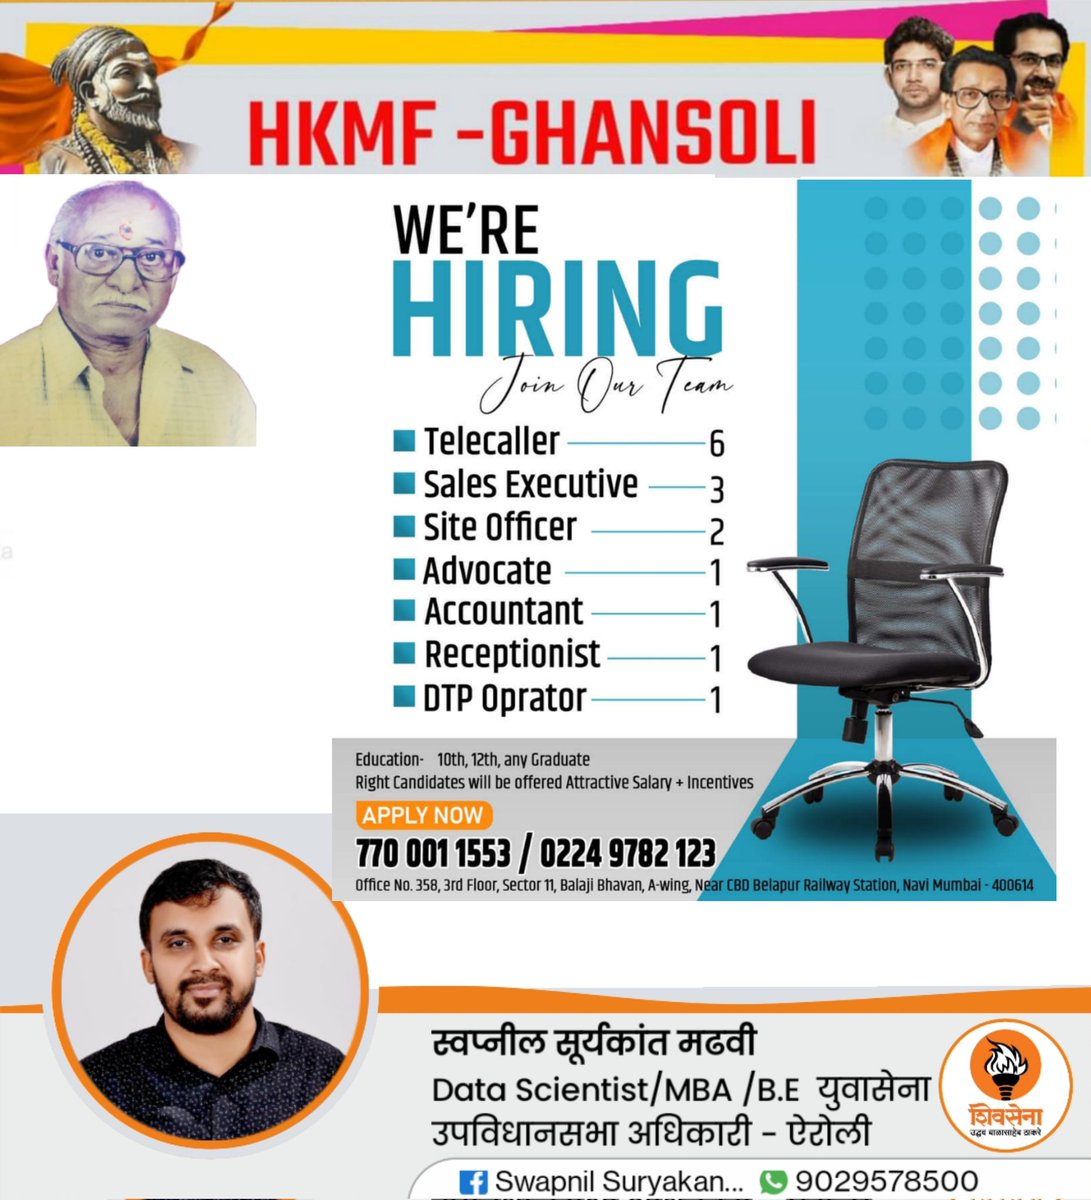 Vacancy available @CBD Belapur, Navi Mumbai.
For more jobs follow 
Harishchandra Kamlya Madhavi Foundation 
#hiring #hiringnow #HiringPost #hiringforajob #callcenter #sales #accountant  #HousekeepingJobs  #salesagent #Marathi #English #viralpost
#HKMF #Ghansoli #NaviMumbai #Jobs